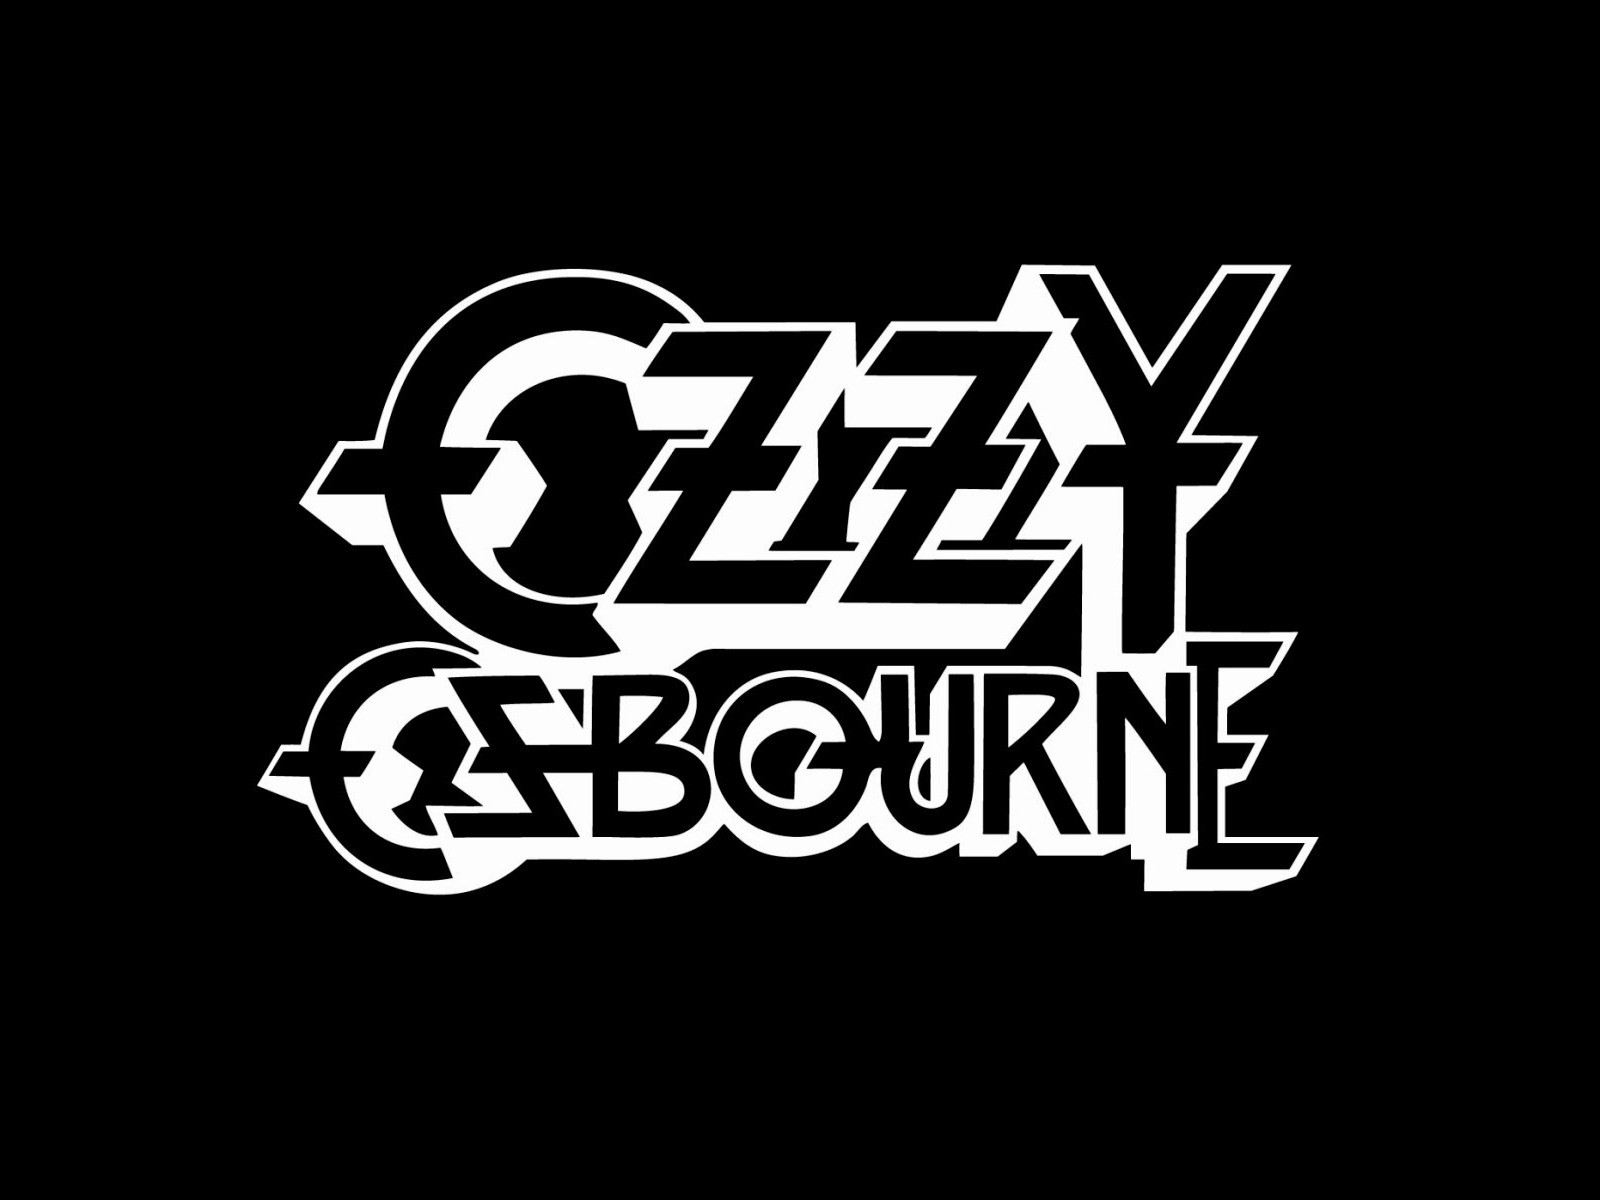  Ozzy Osbourne Cellphone FHD pic